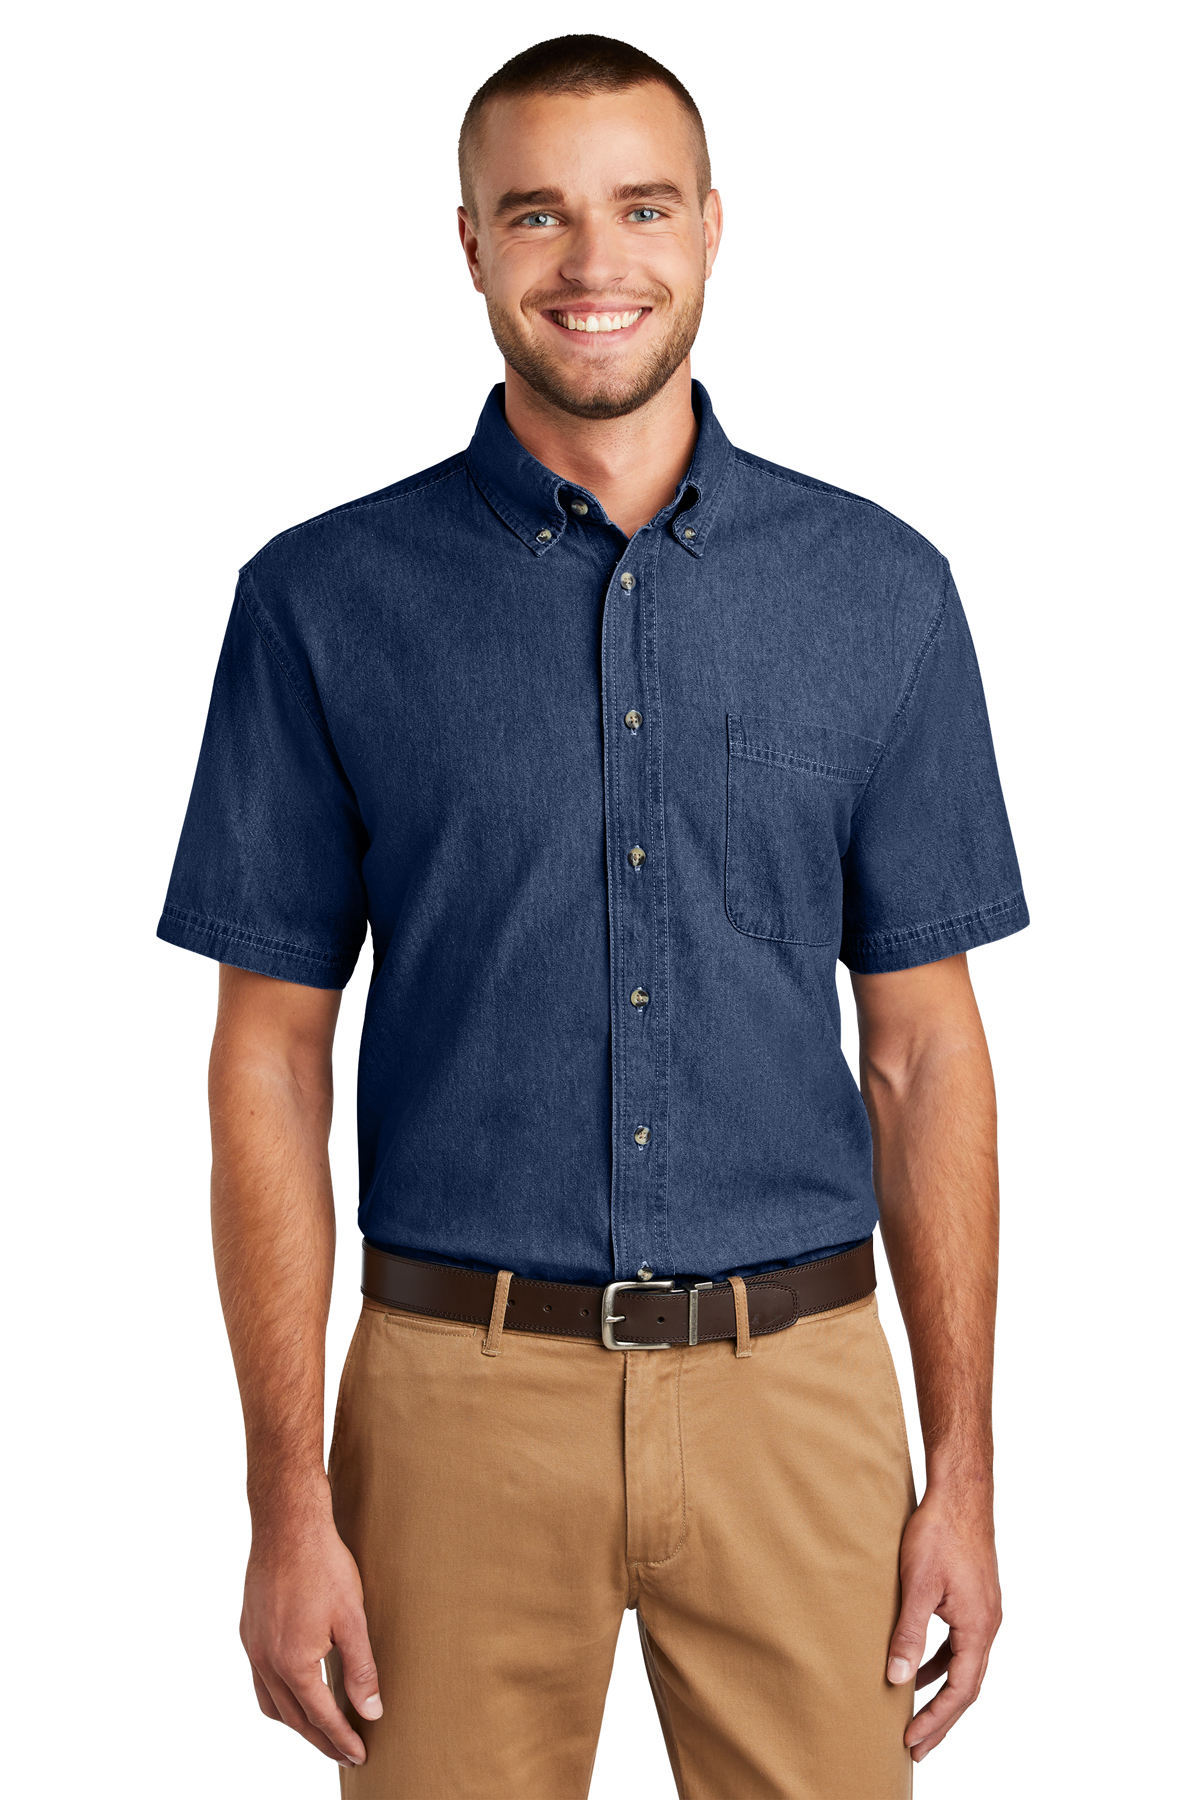 LSP11 PORT AND COMPANY Short Sleeve Value Denim Shirt 